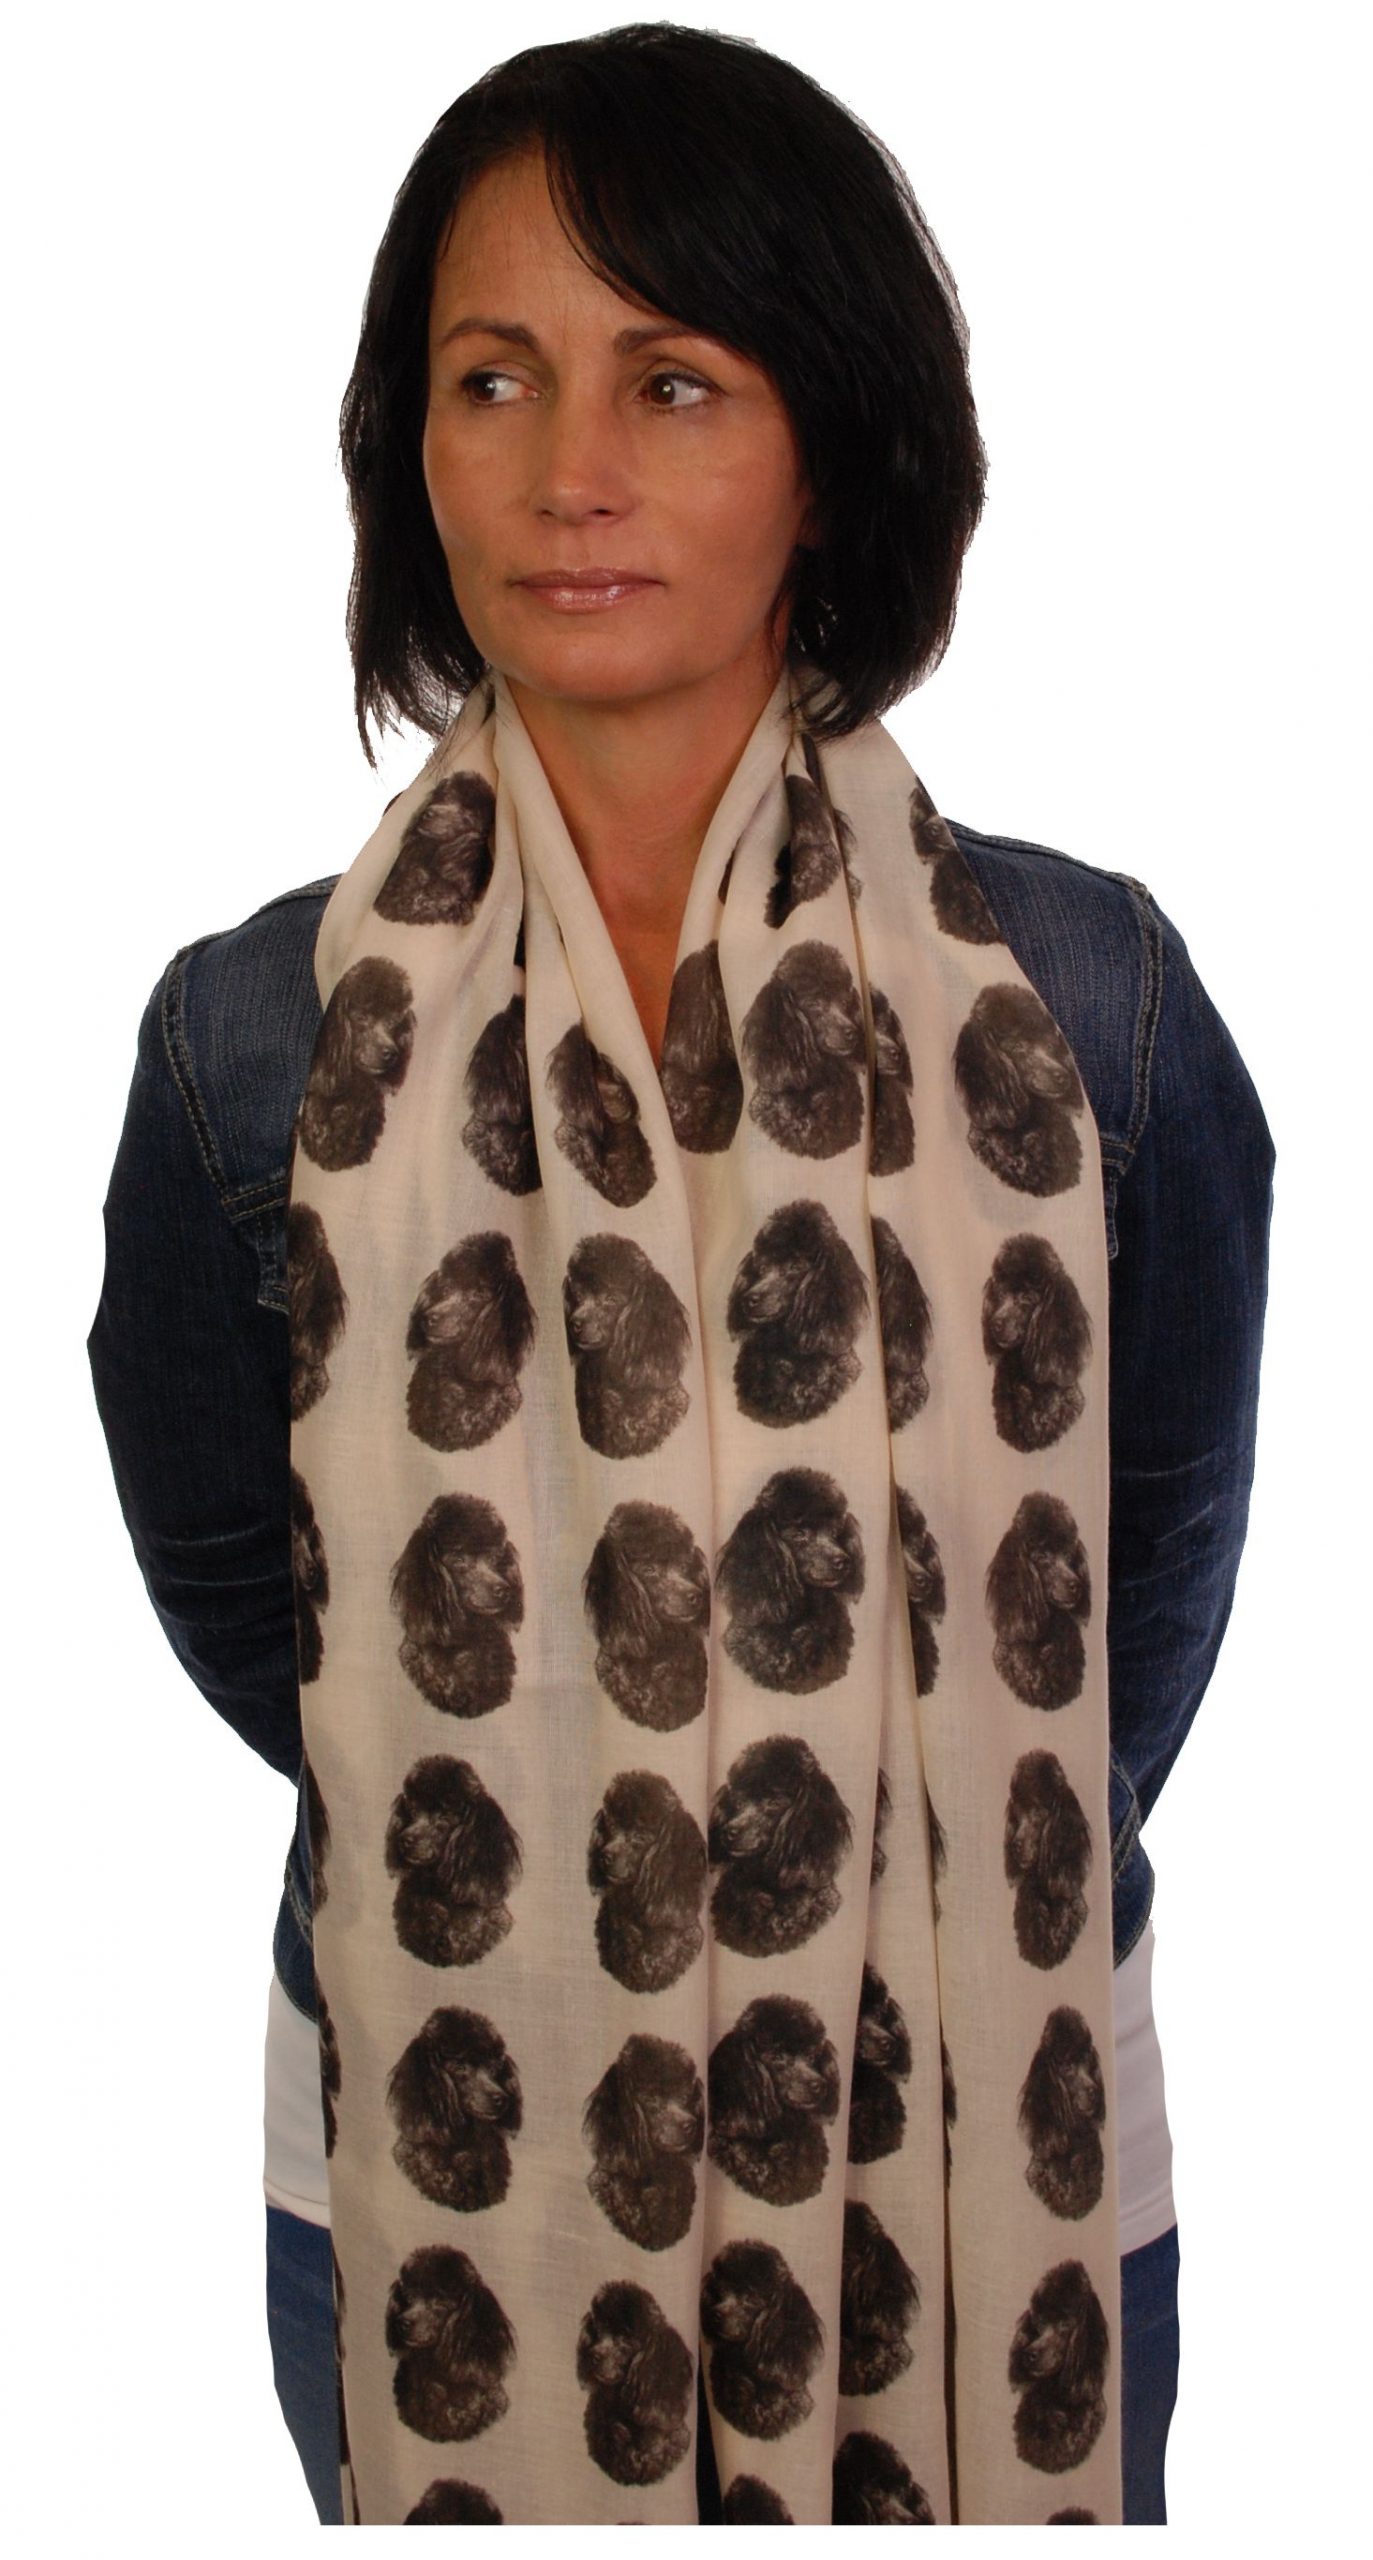 Mike Sibley Poodle licensed design ladies fashion scarf